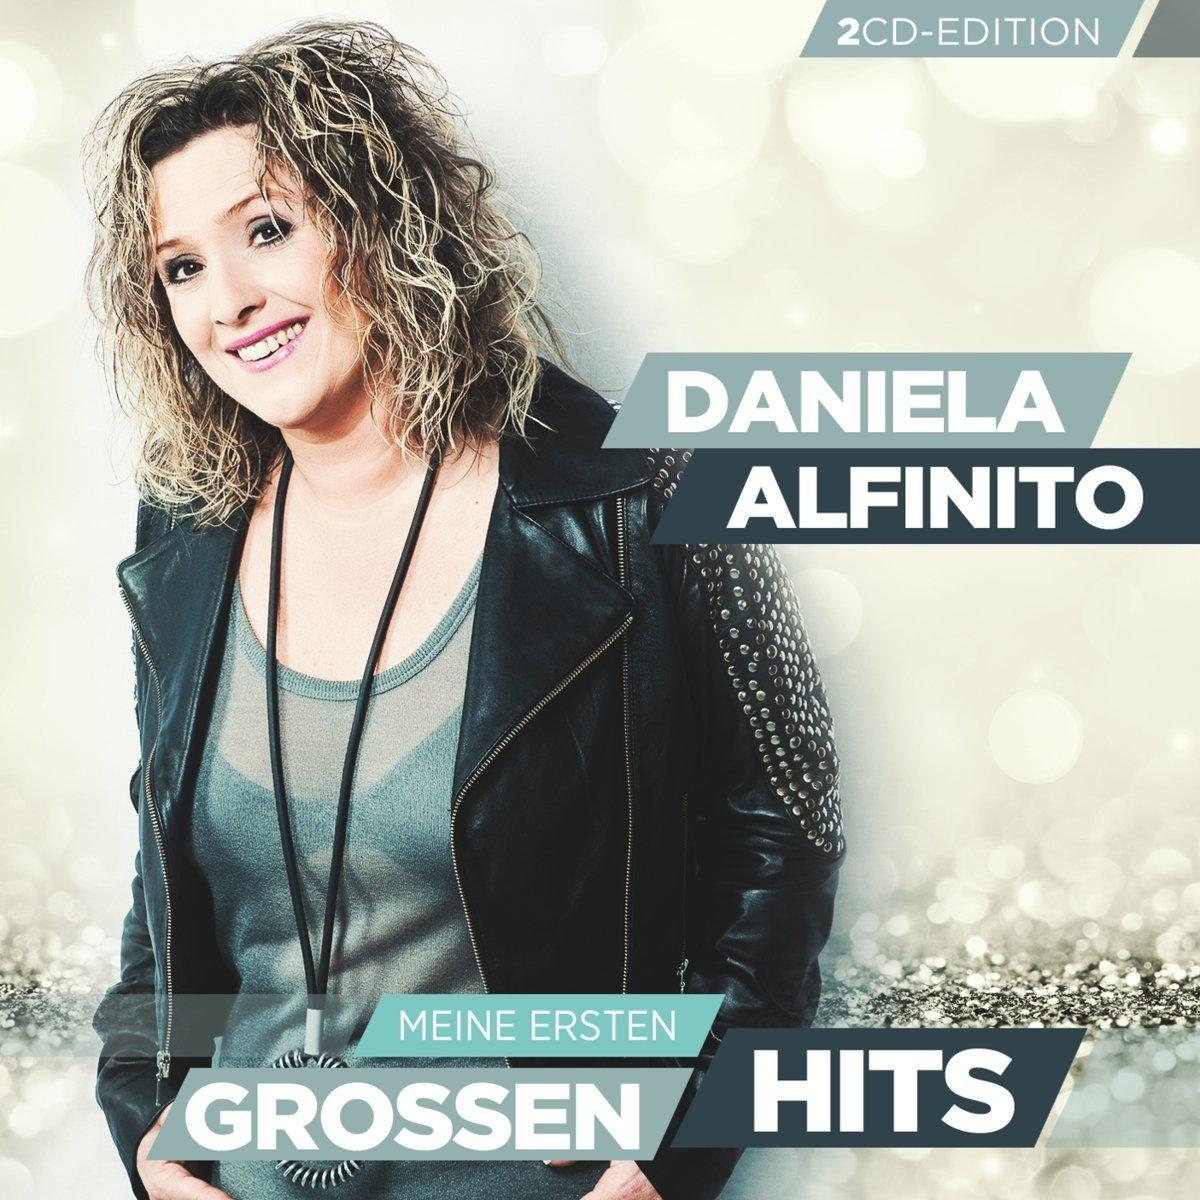 Daniela Alfinito - Meine ersten (CD) großen Hits 